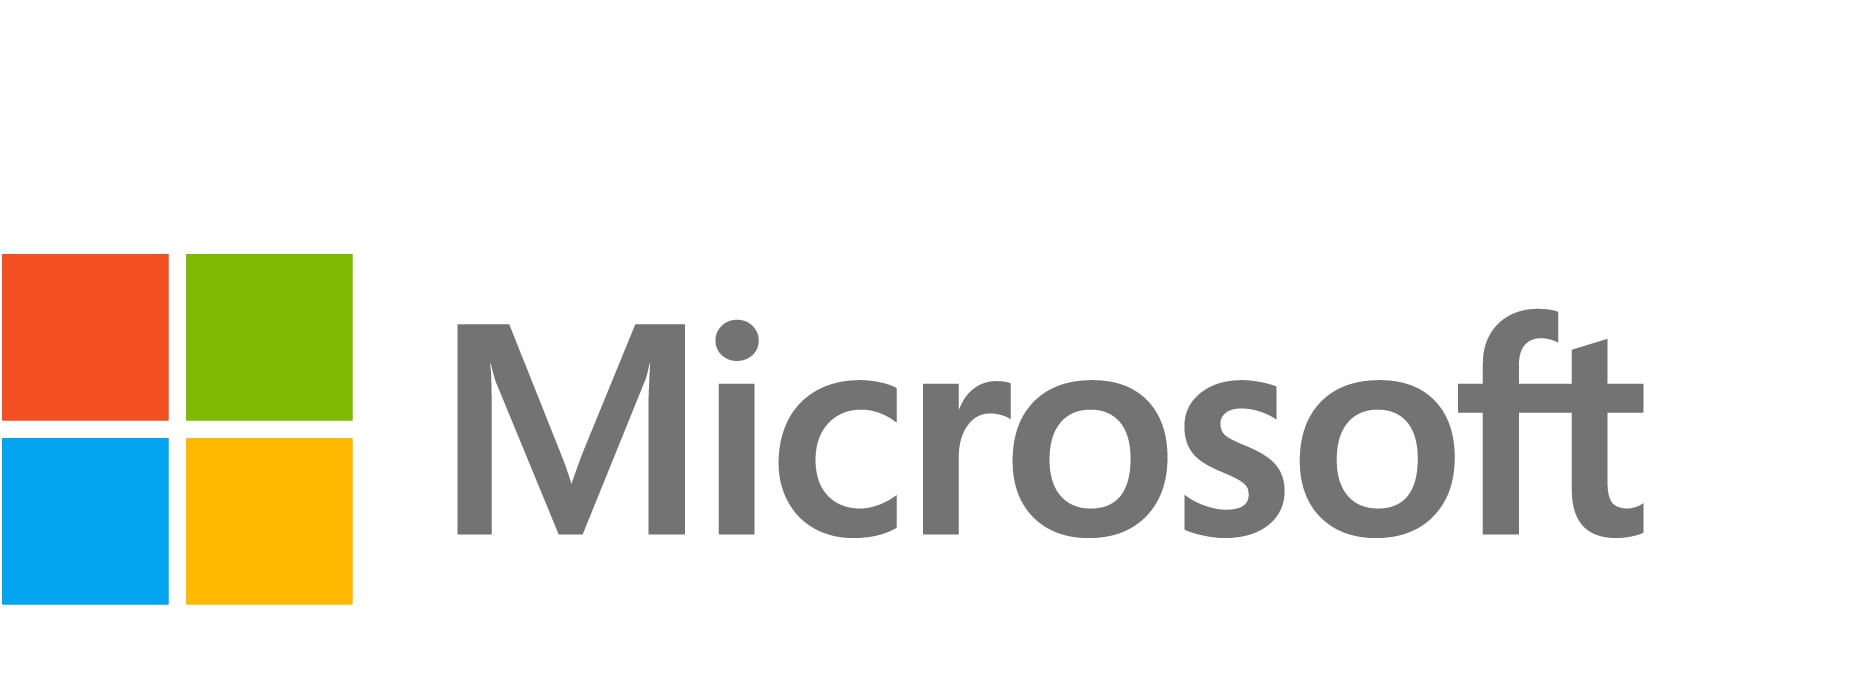 Microsoft Windows Remote Desktop Services 2019 - license - 1 user CAL